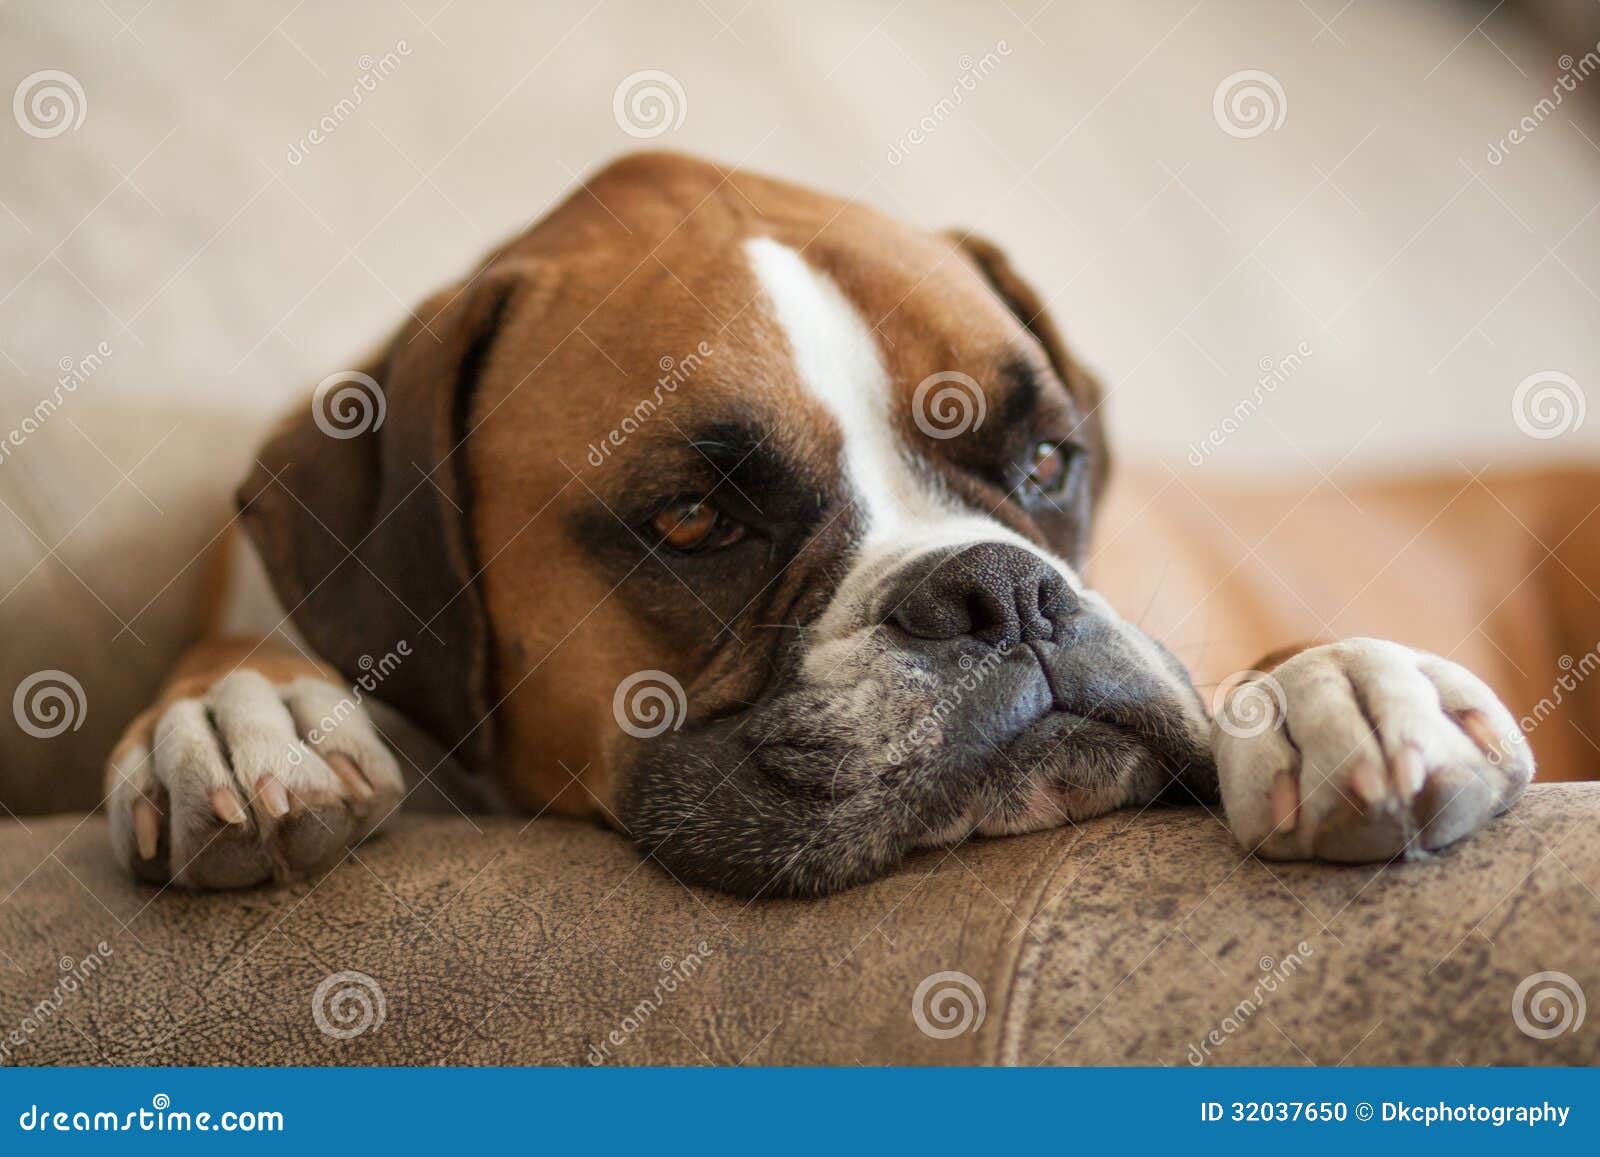 resting boxer dog